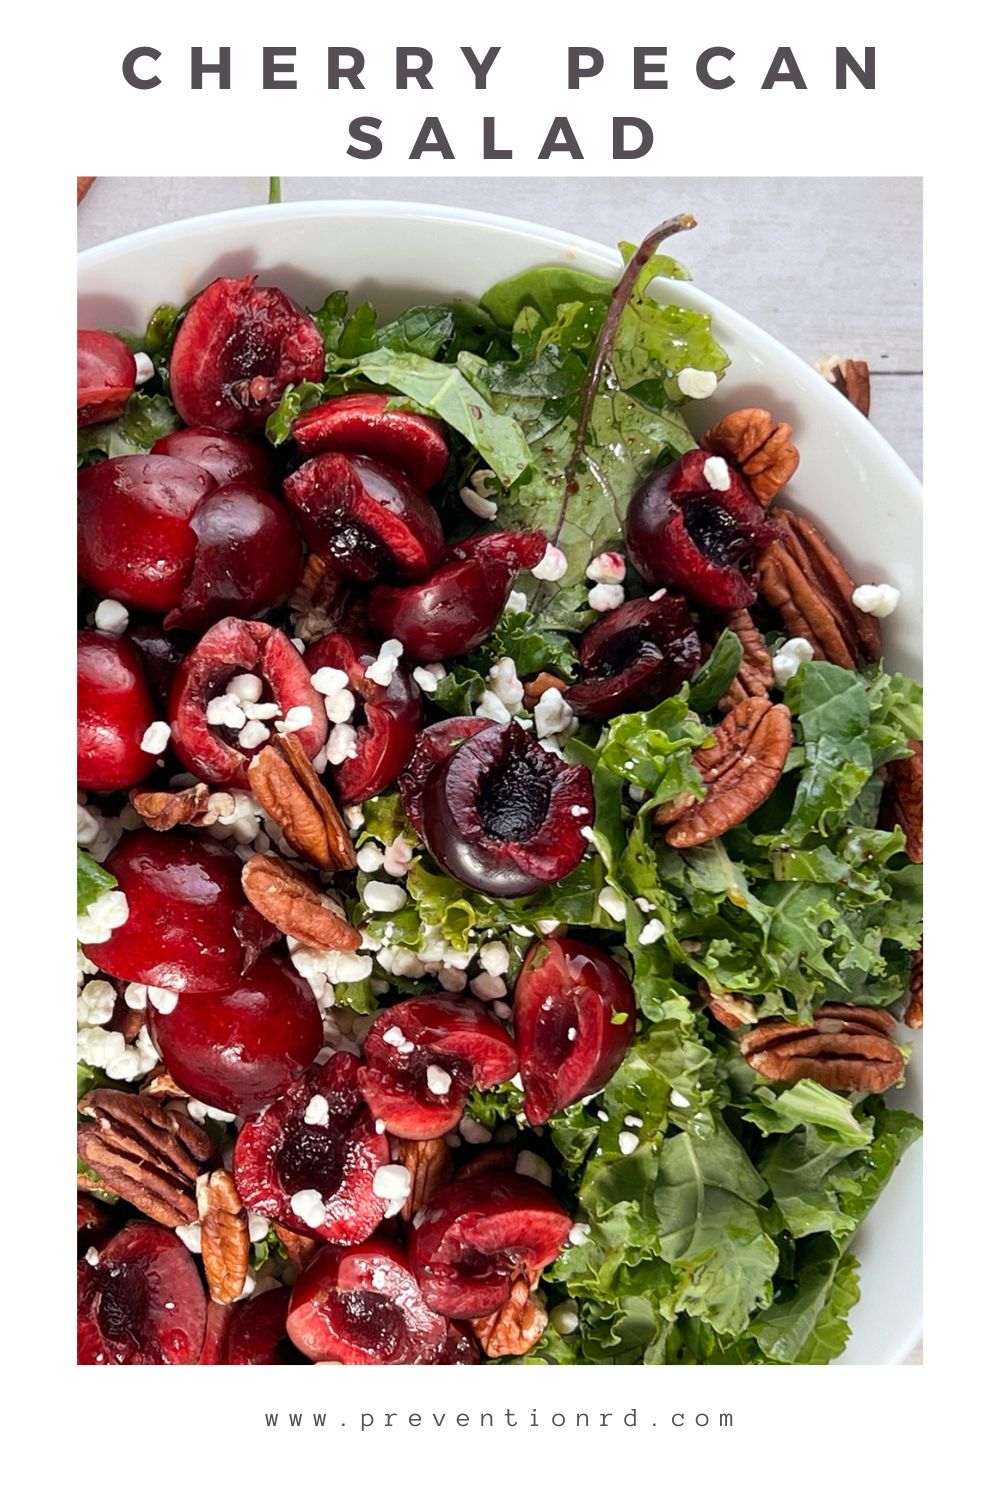 Cherry Pecan Salad with Goat Cheese and Balsamic Vinaigrette via @preventionrd